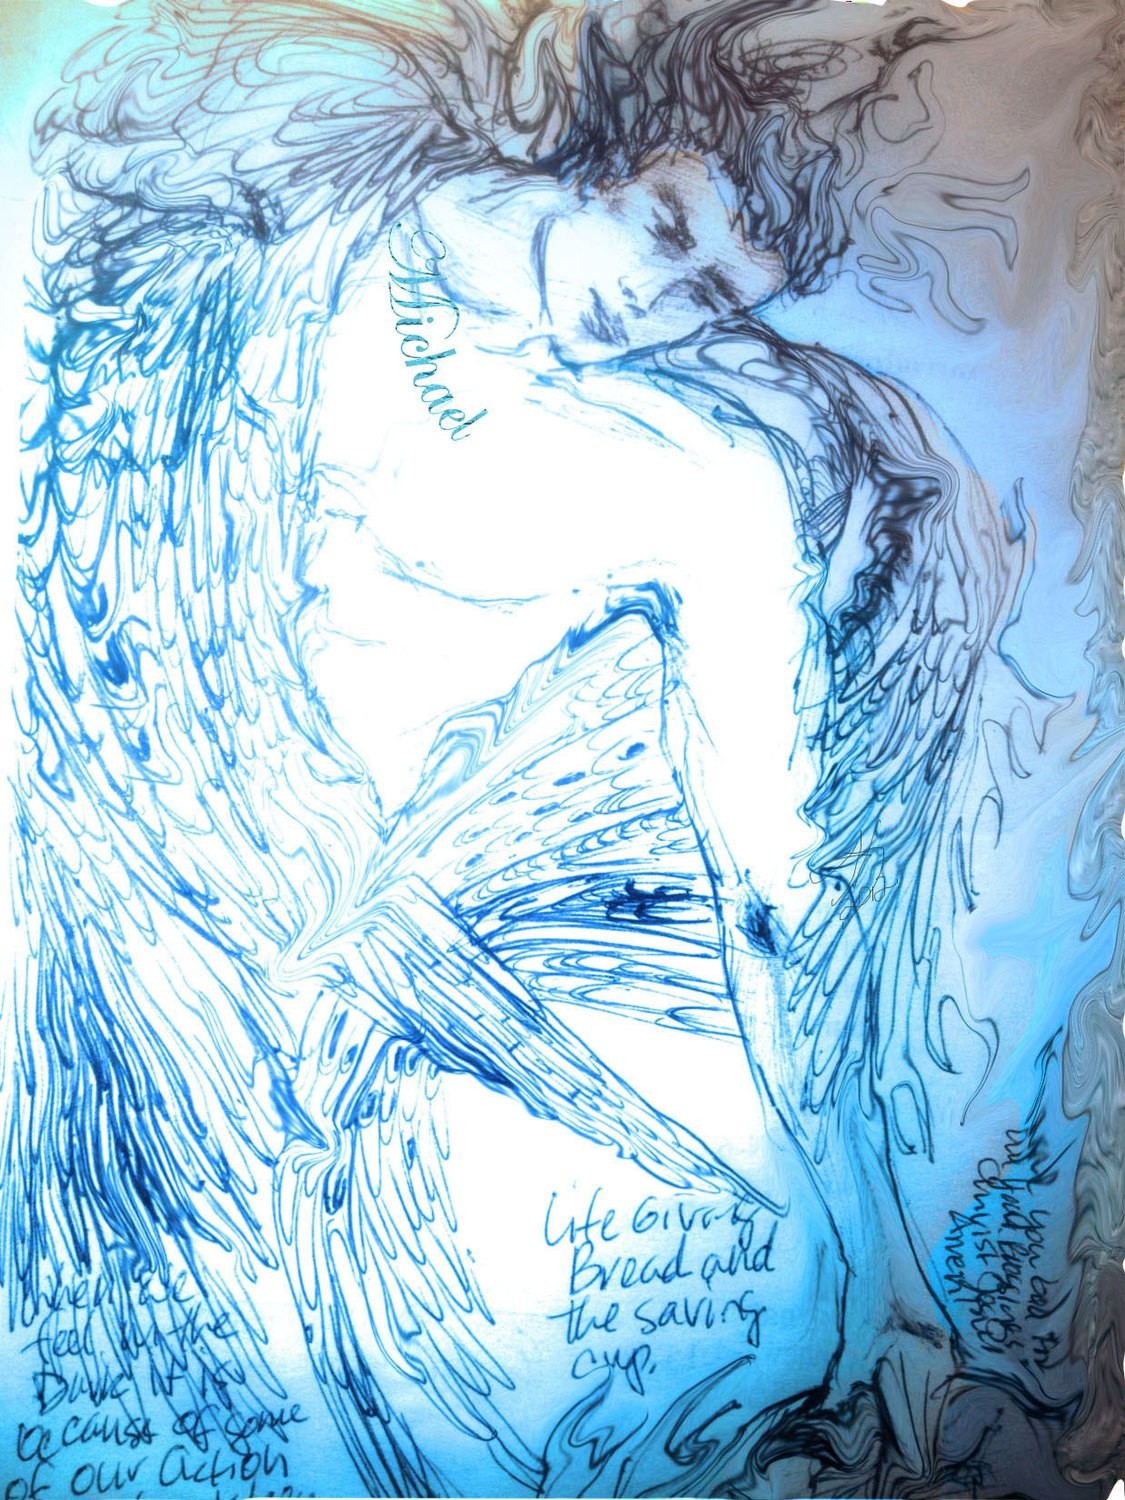 Original Rough sketch for Archangel Michael